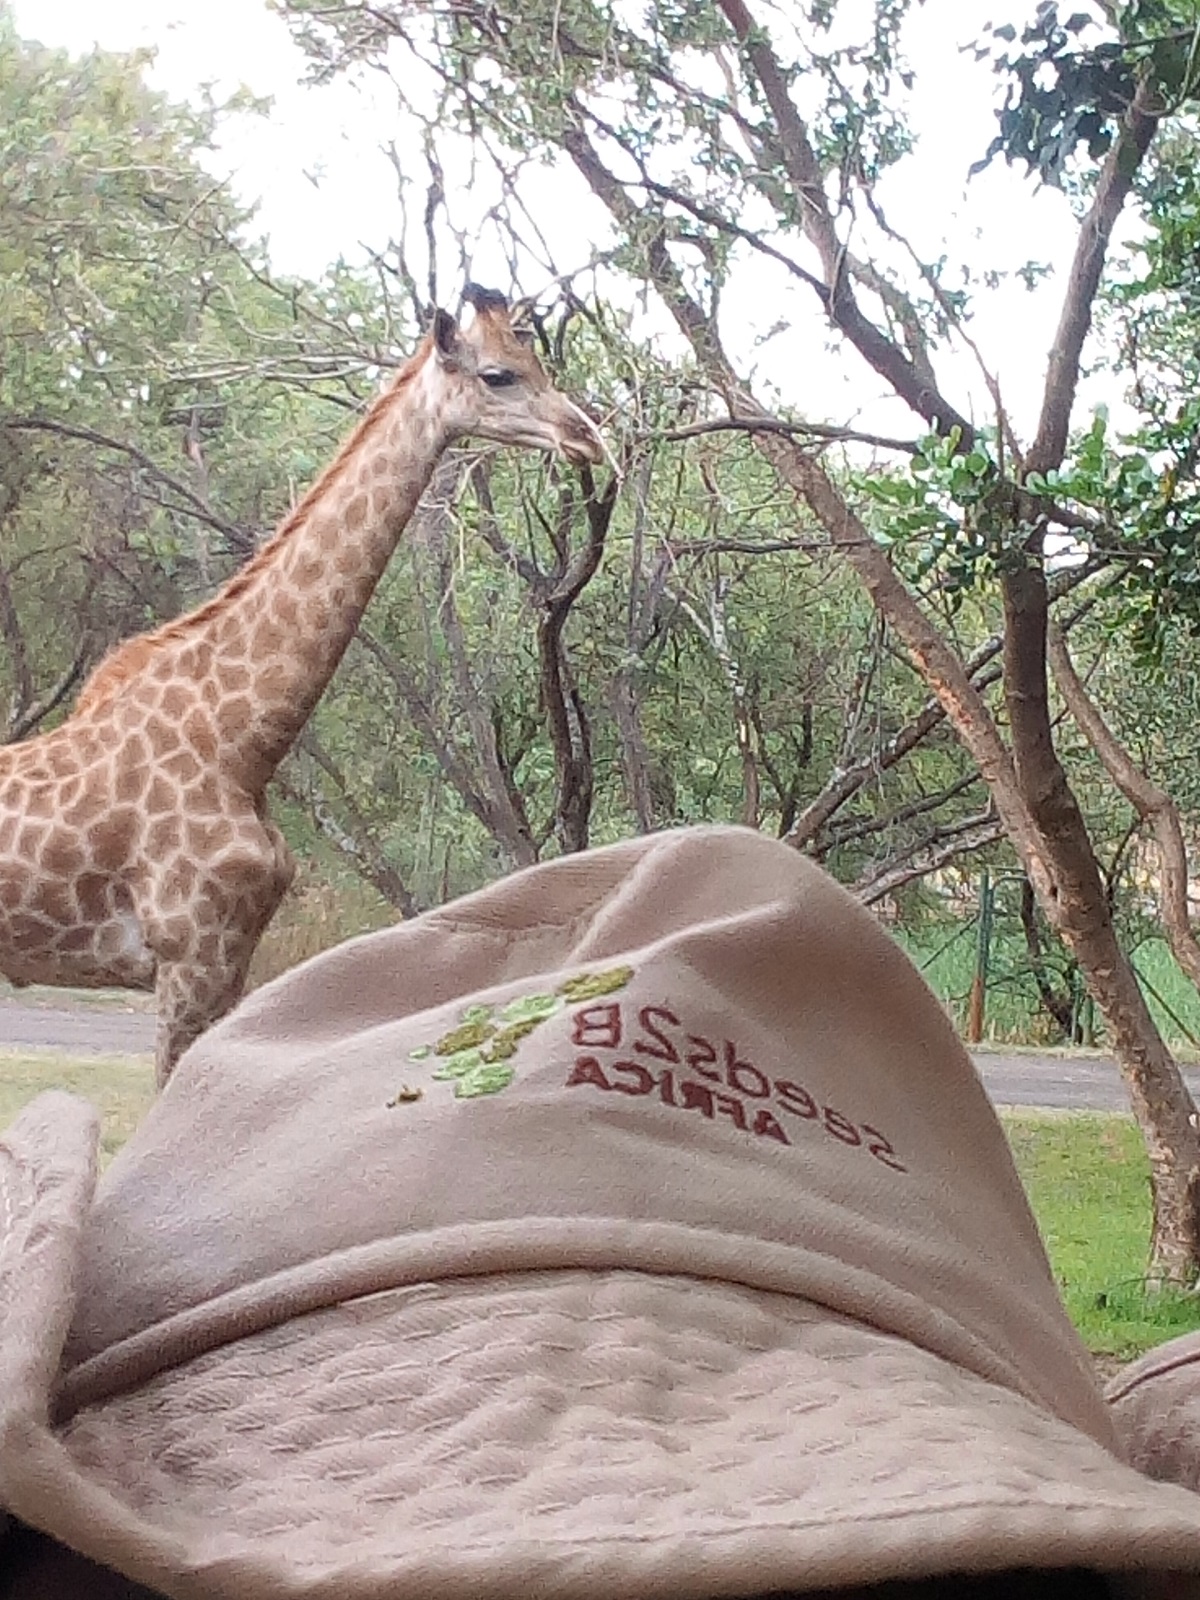 Giraffes browse, they do not graze. 